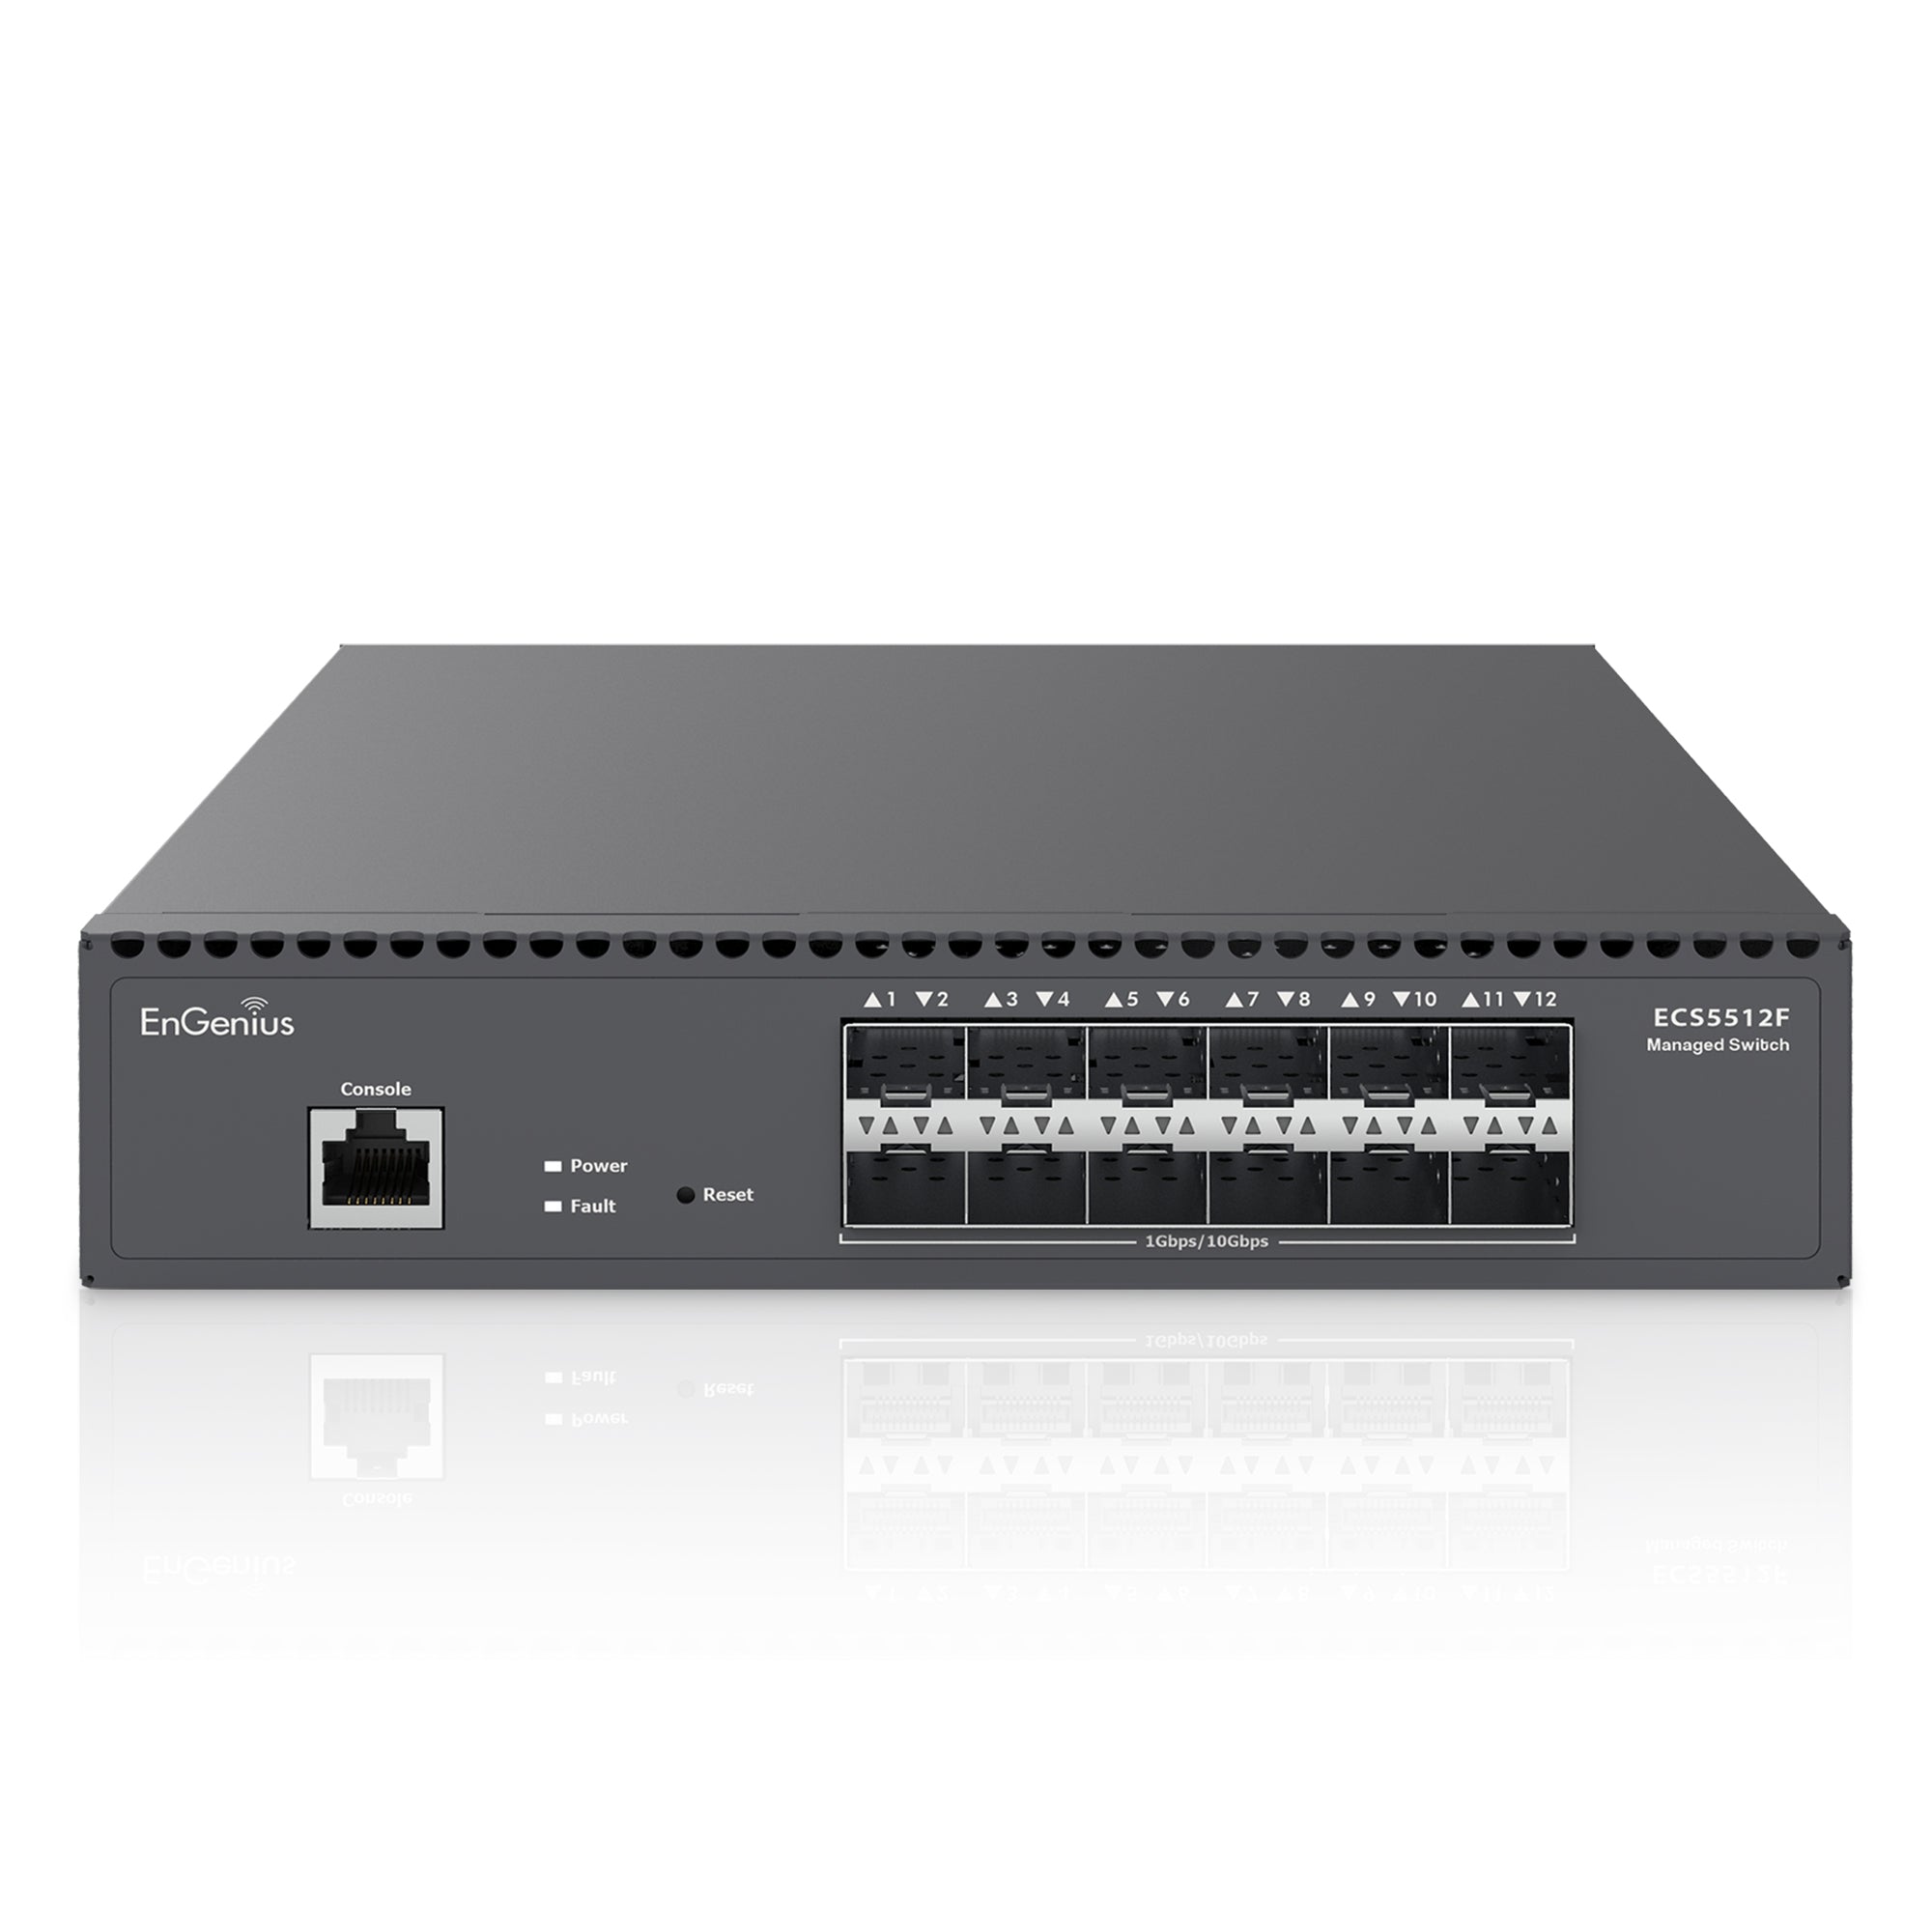 ECS5512F: Cloud Managed 12-Port 10 Gigabit SFP+ Half-Rack Aggregate Fiber Switch